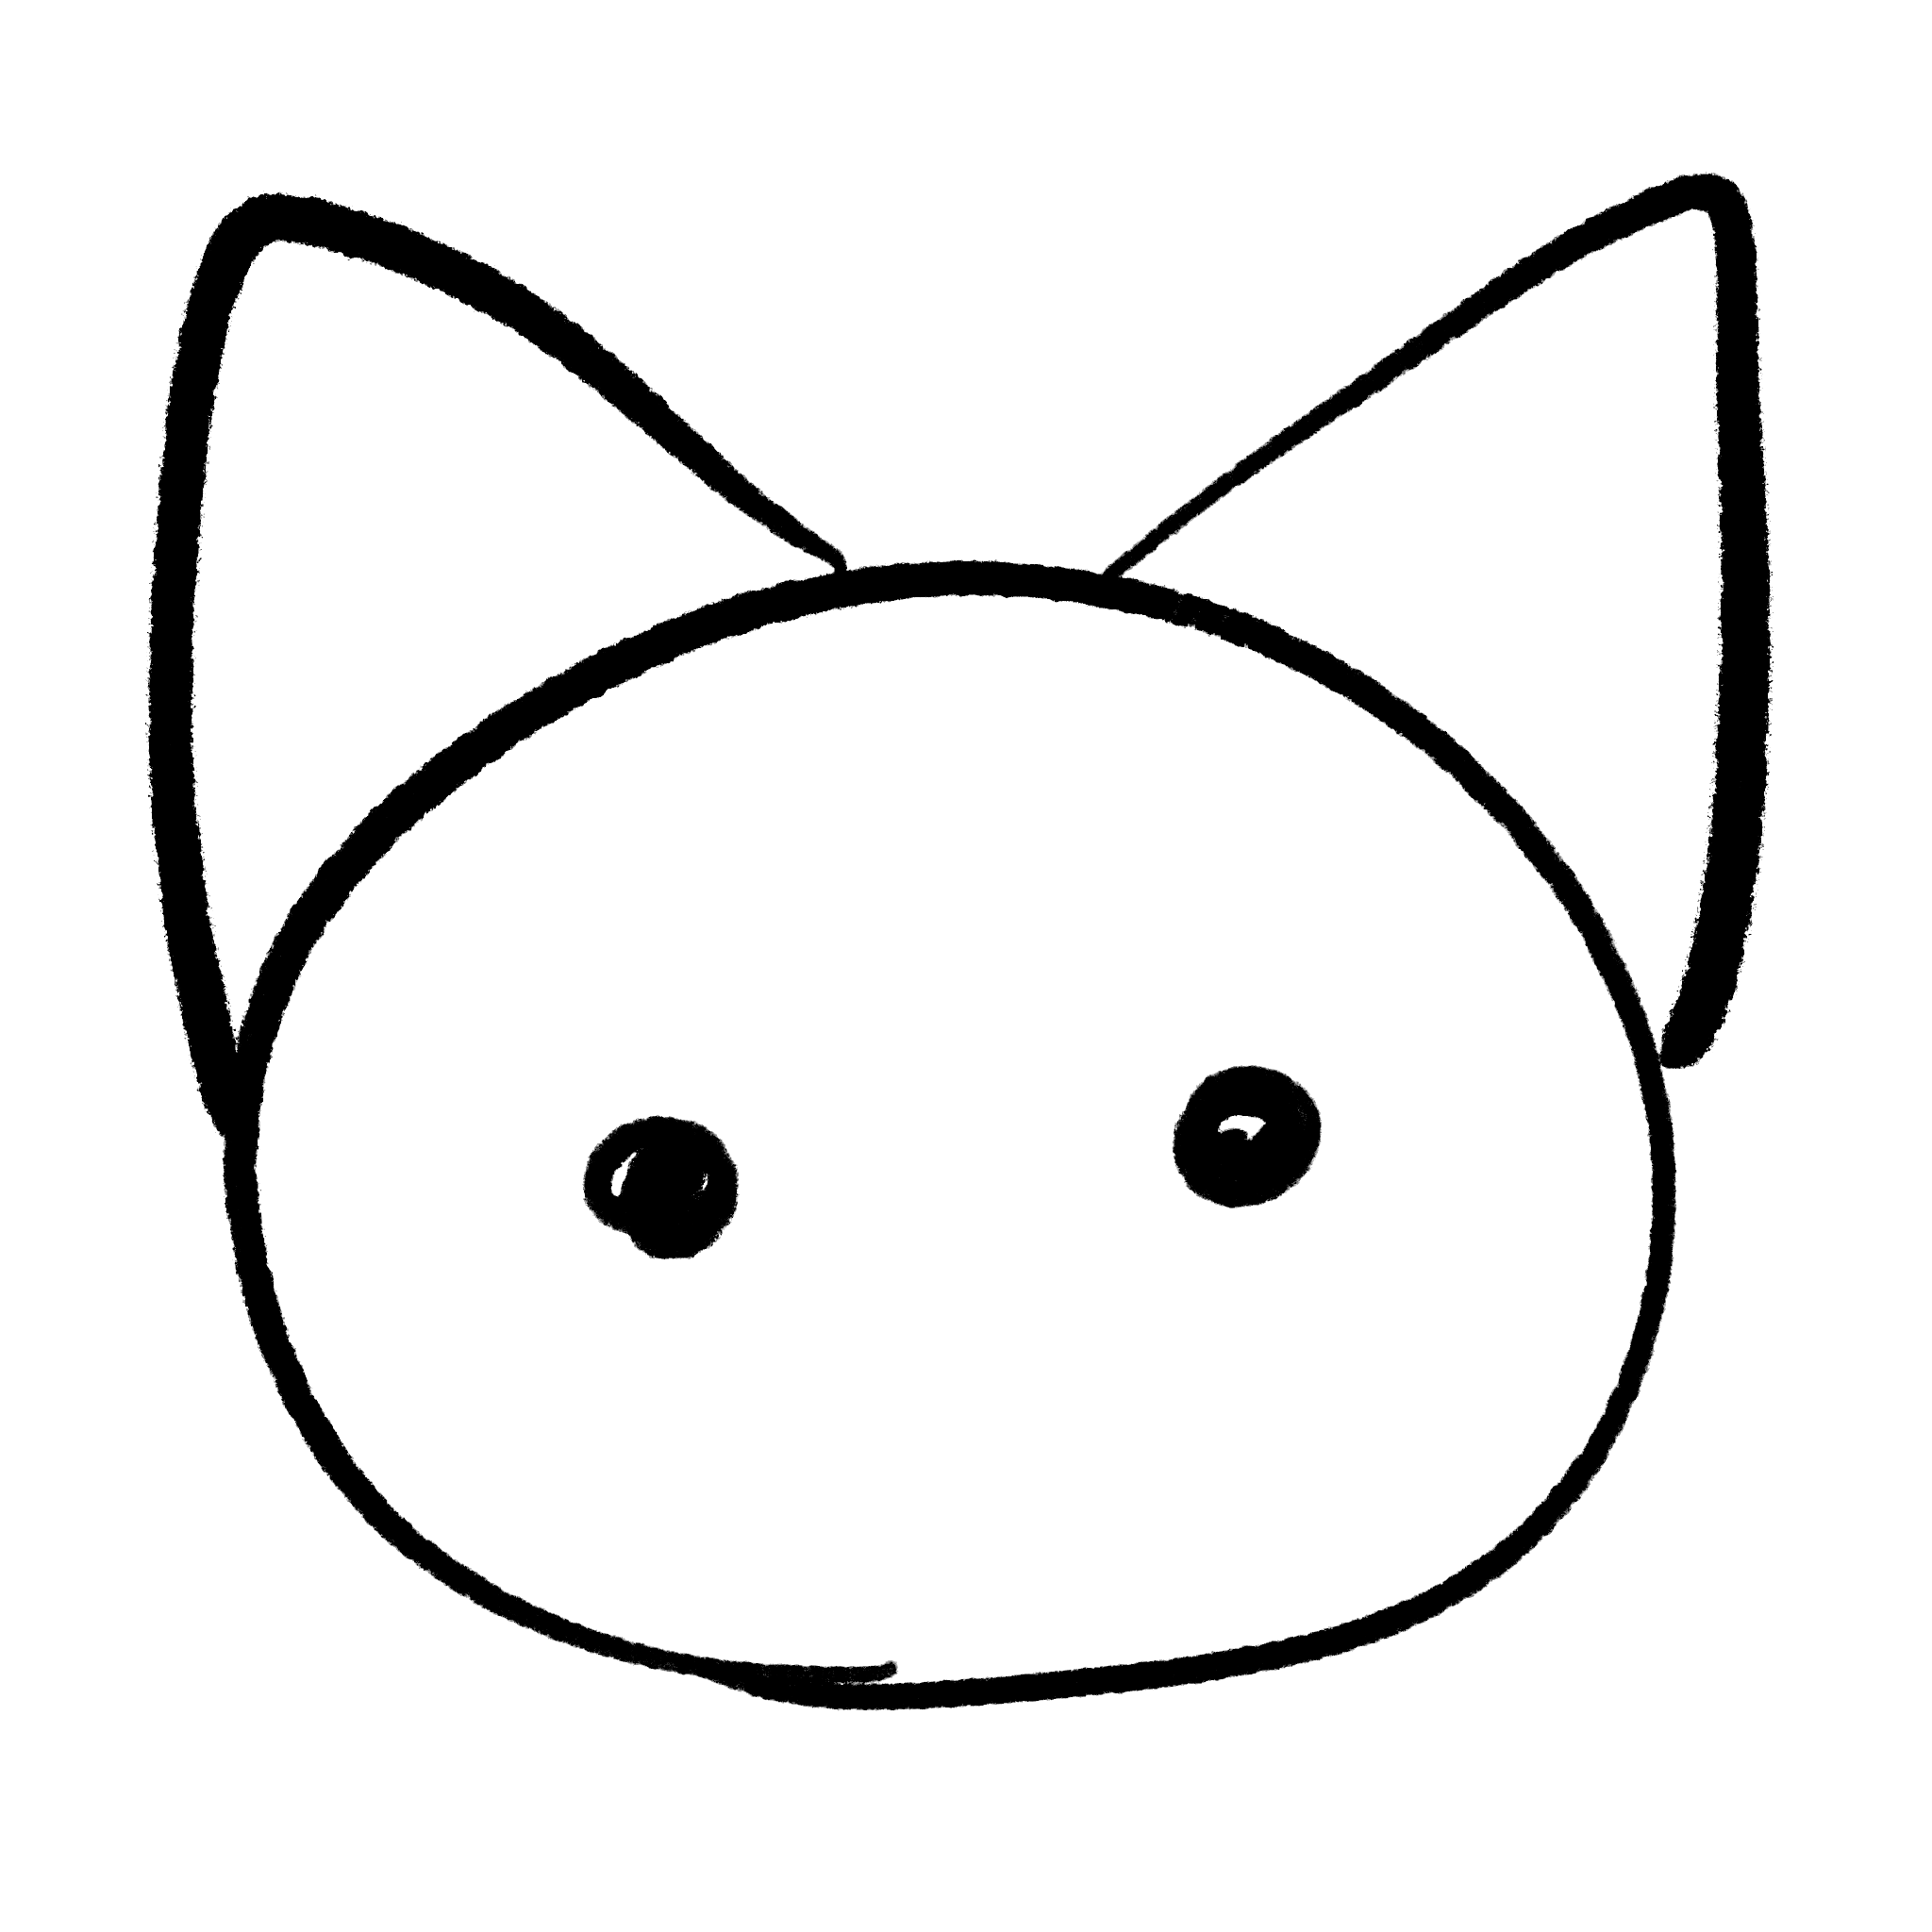 Minimalist doodle of a cat